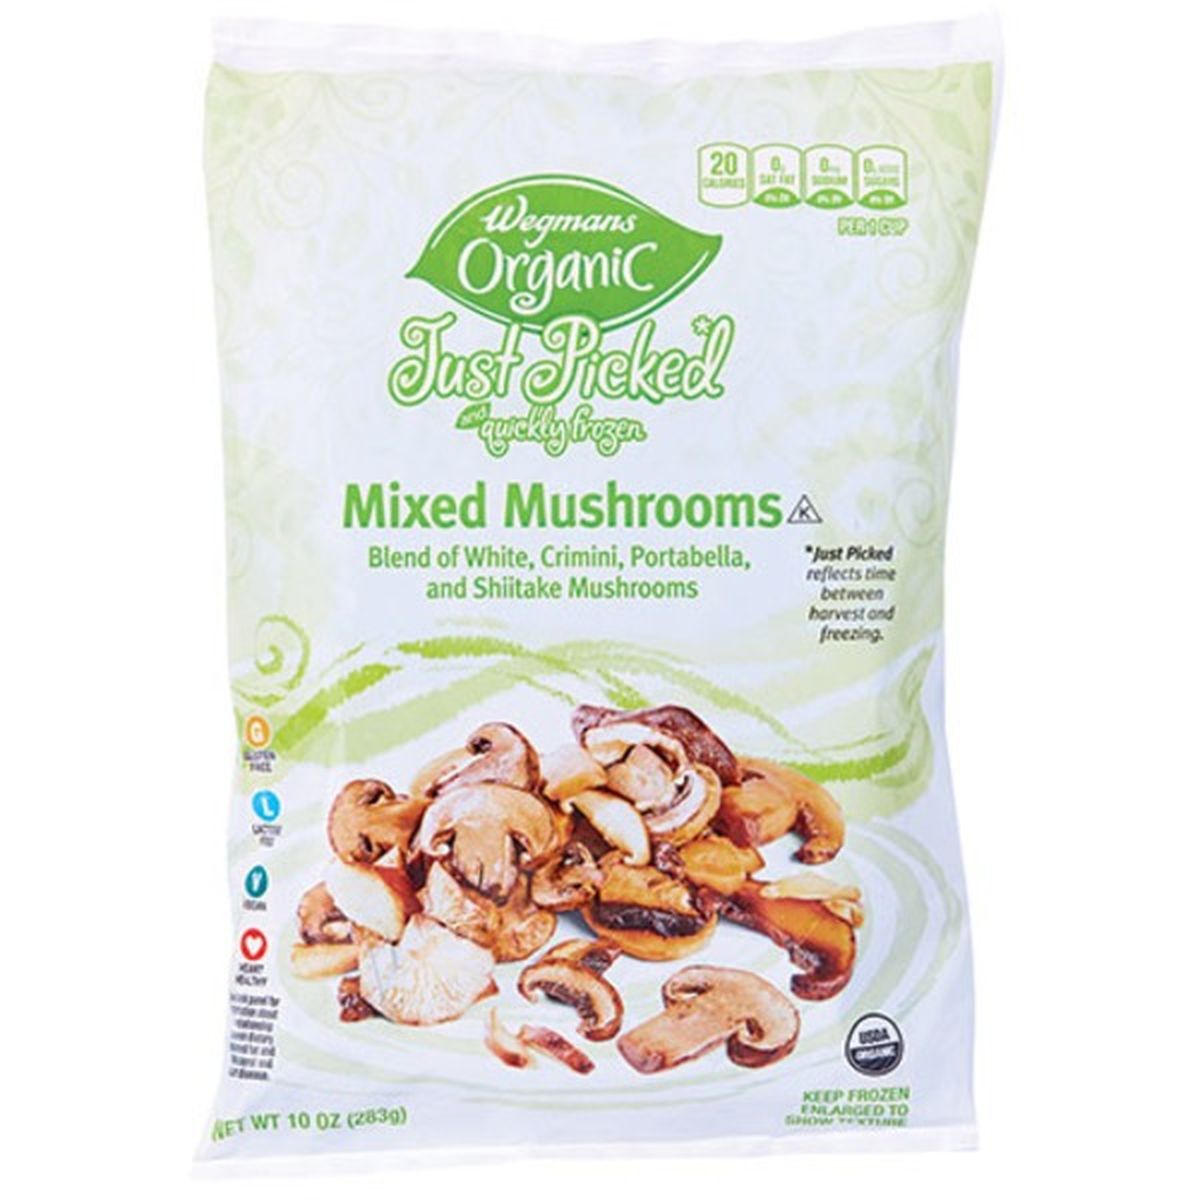 Calories in Wegmans Organic Frozen Mixed Mushrooms